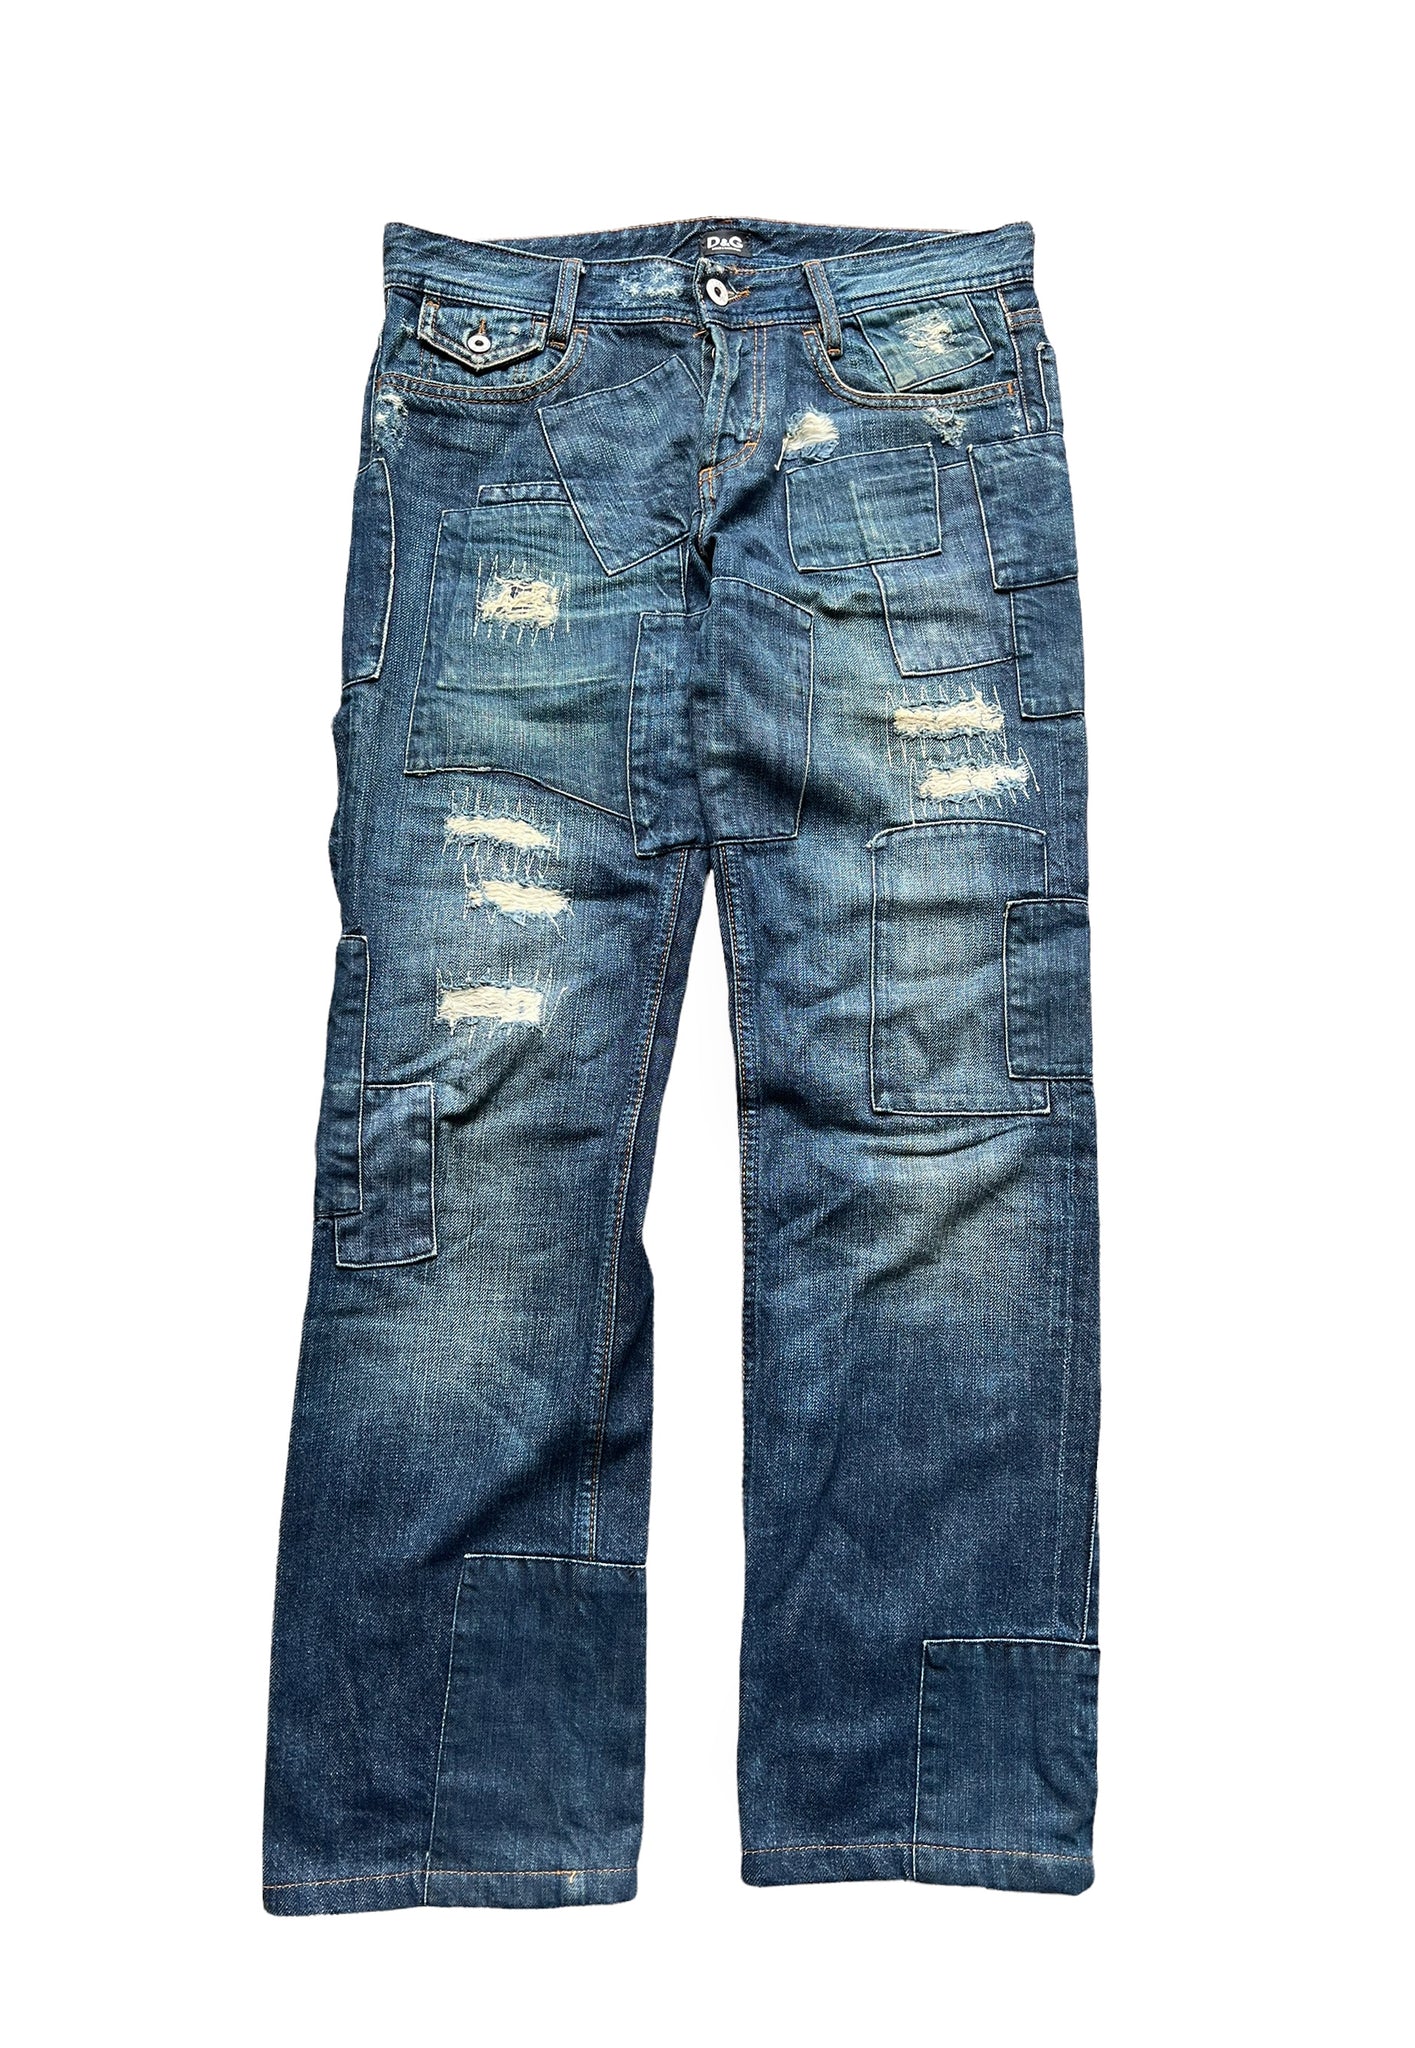 Jeans & Pants | Men's Wear Blue Red Damage Denim Jeans Design .. | Freeup